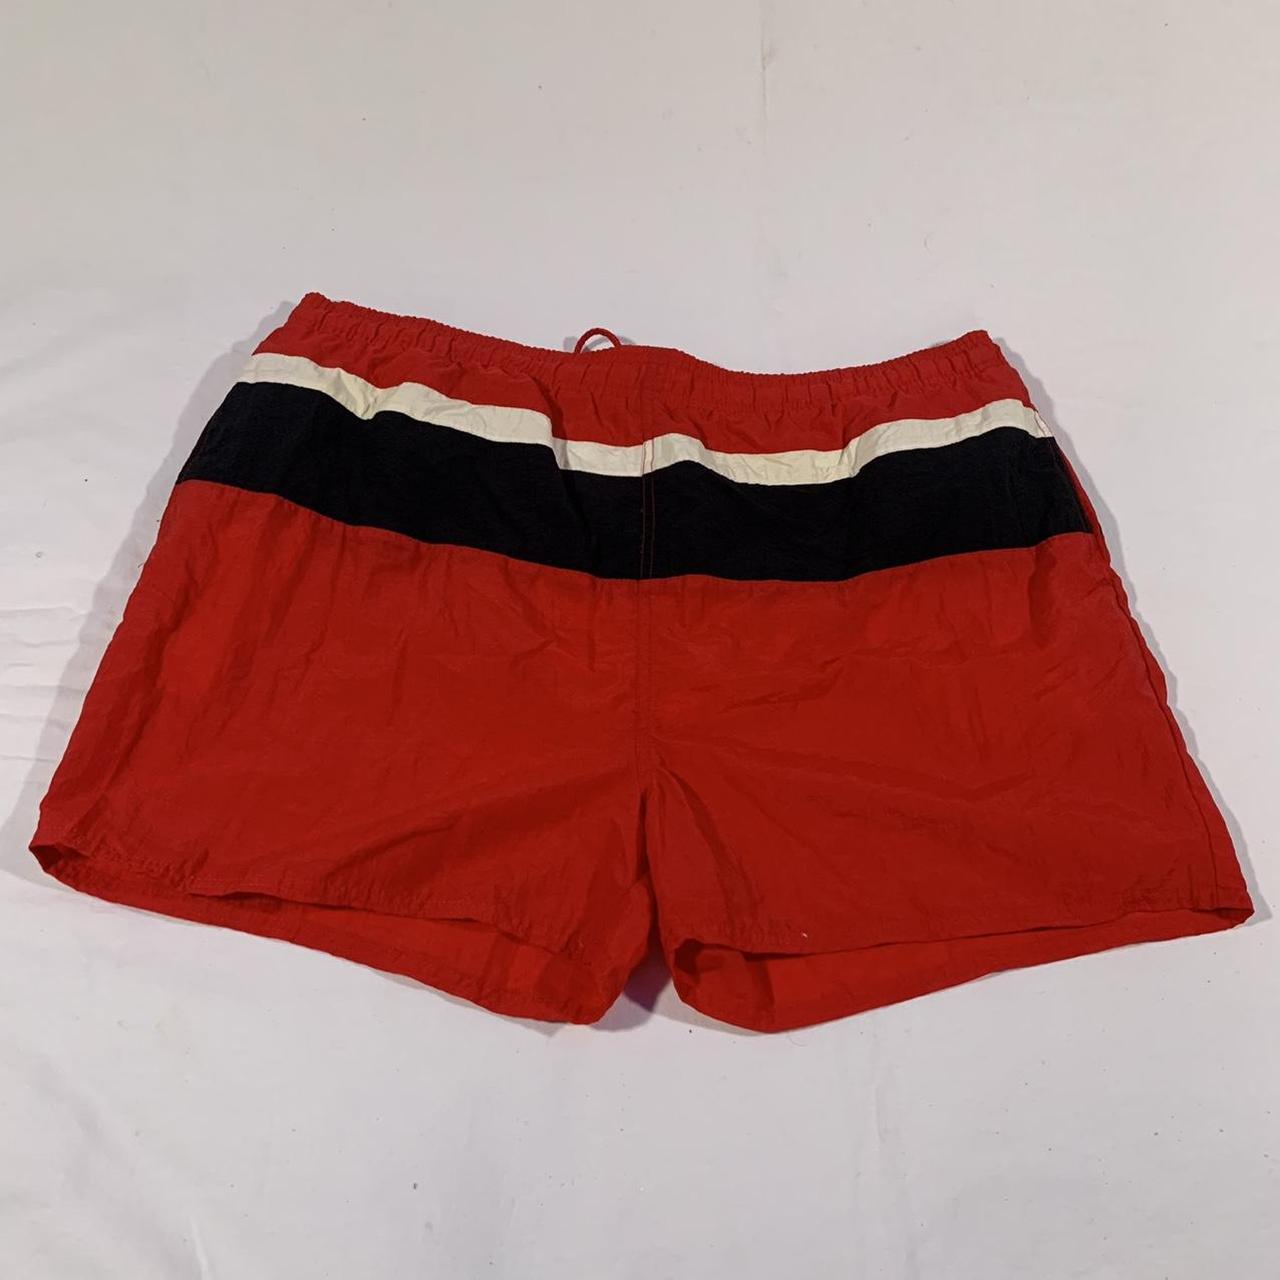 Product Image 1 - red black white shorts /